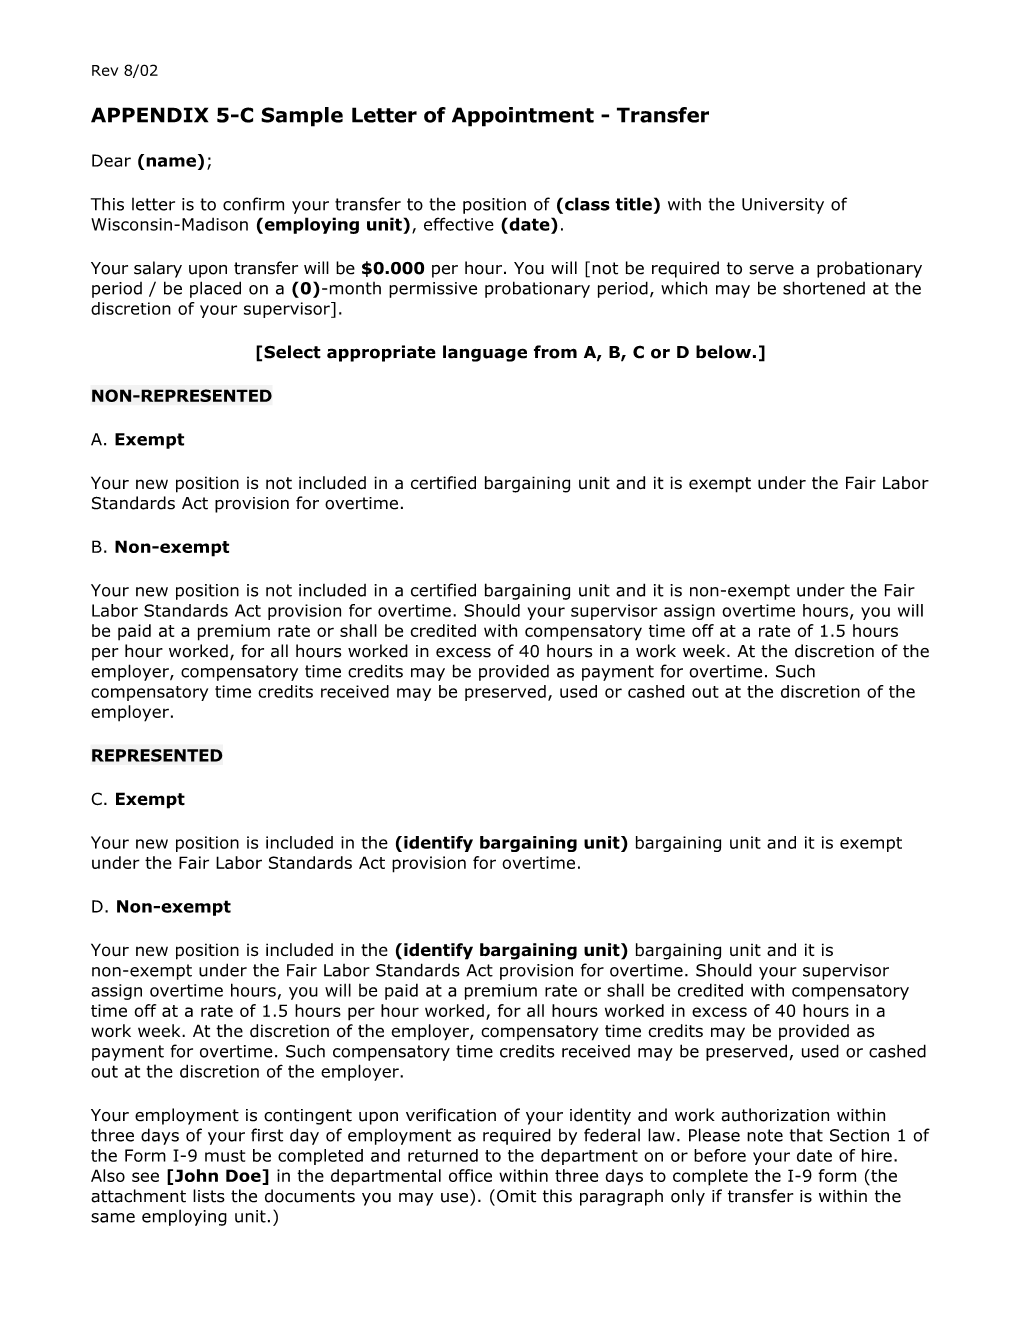 APPENDIX 5-C Sampleletter of Appointment - Transfer